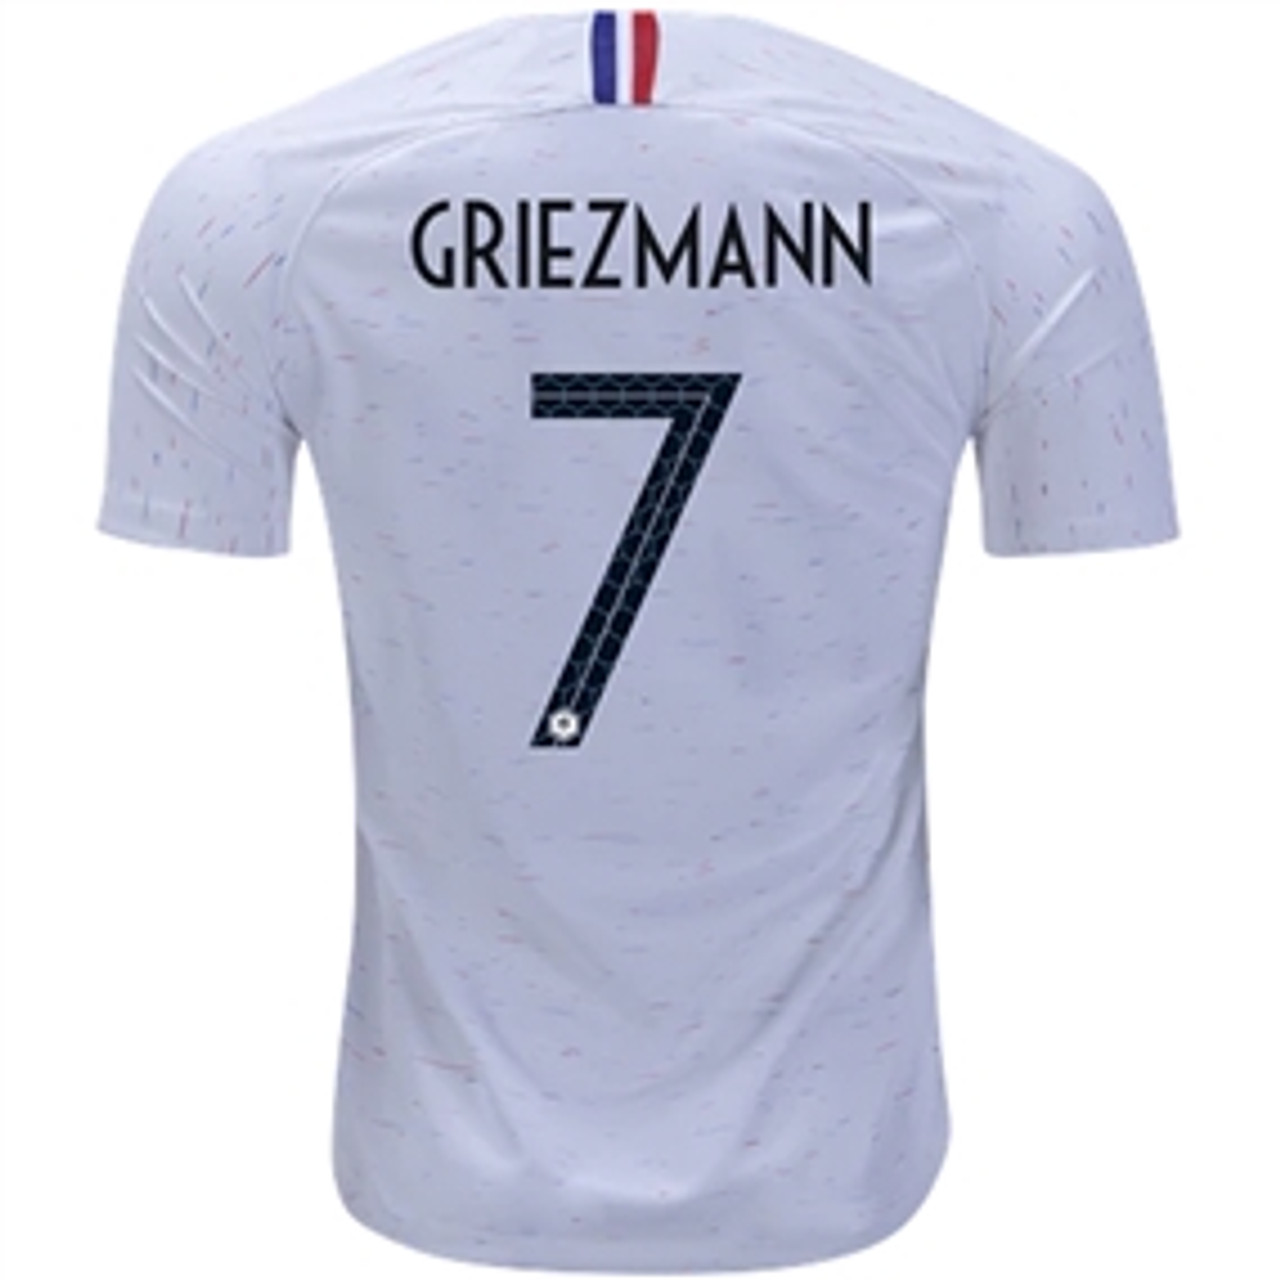 griezmann jersey